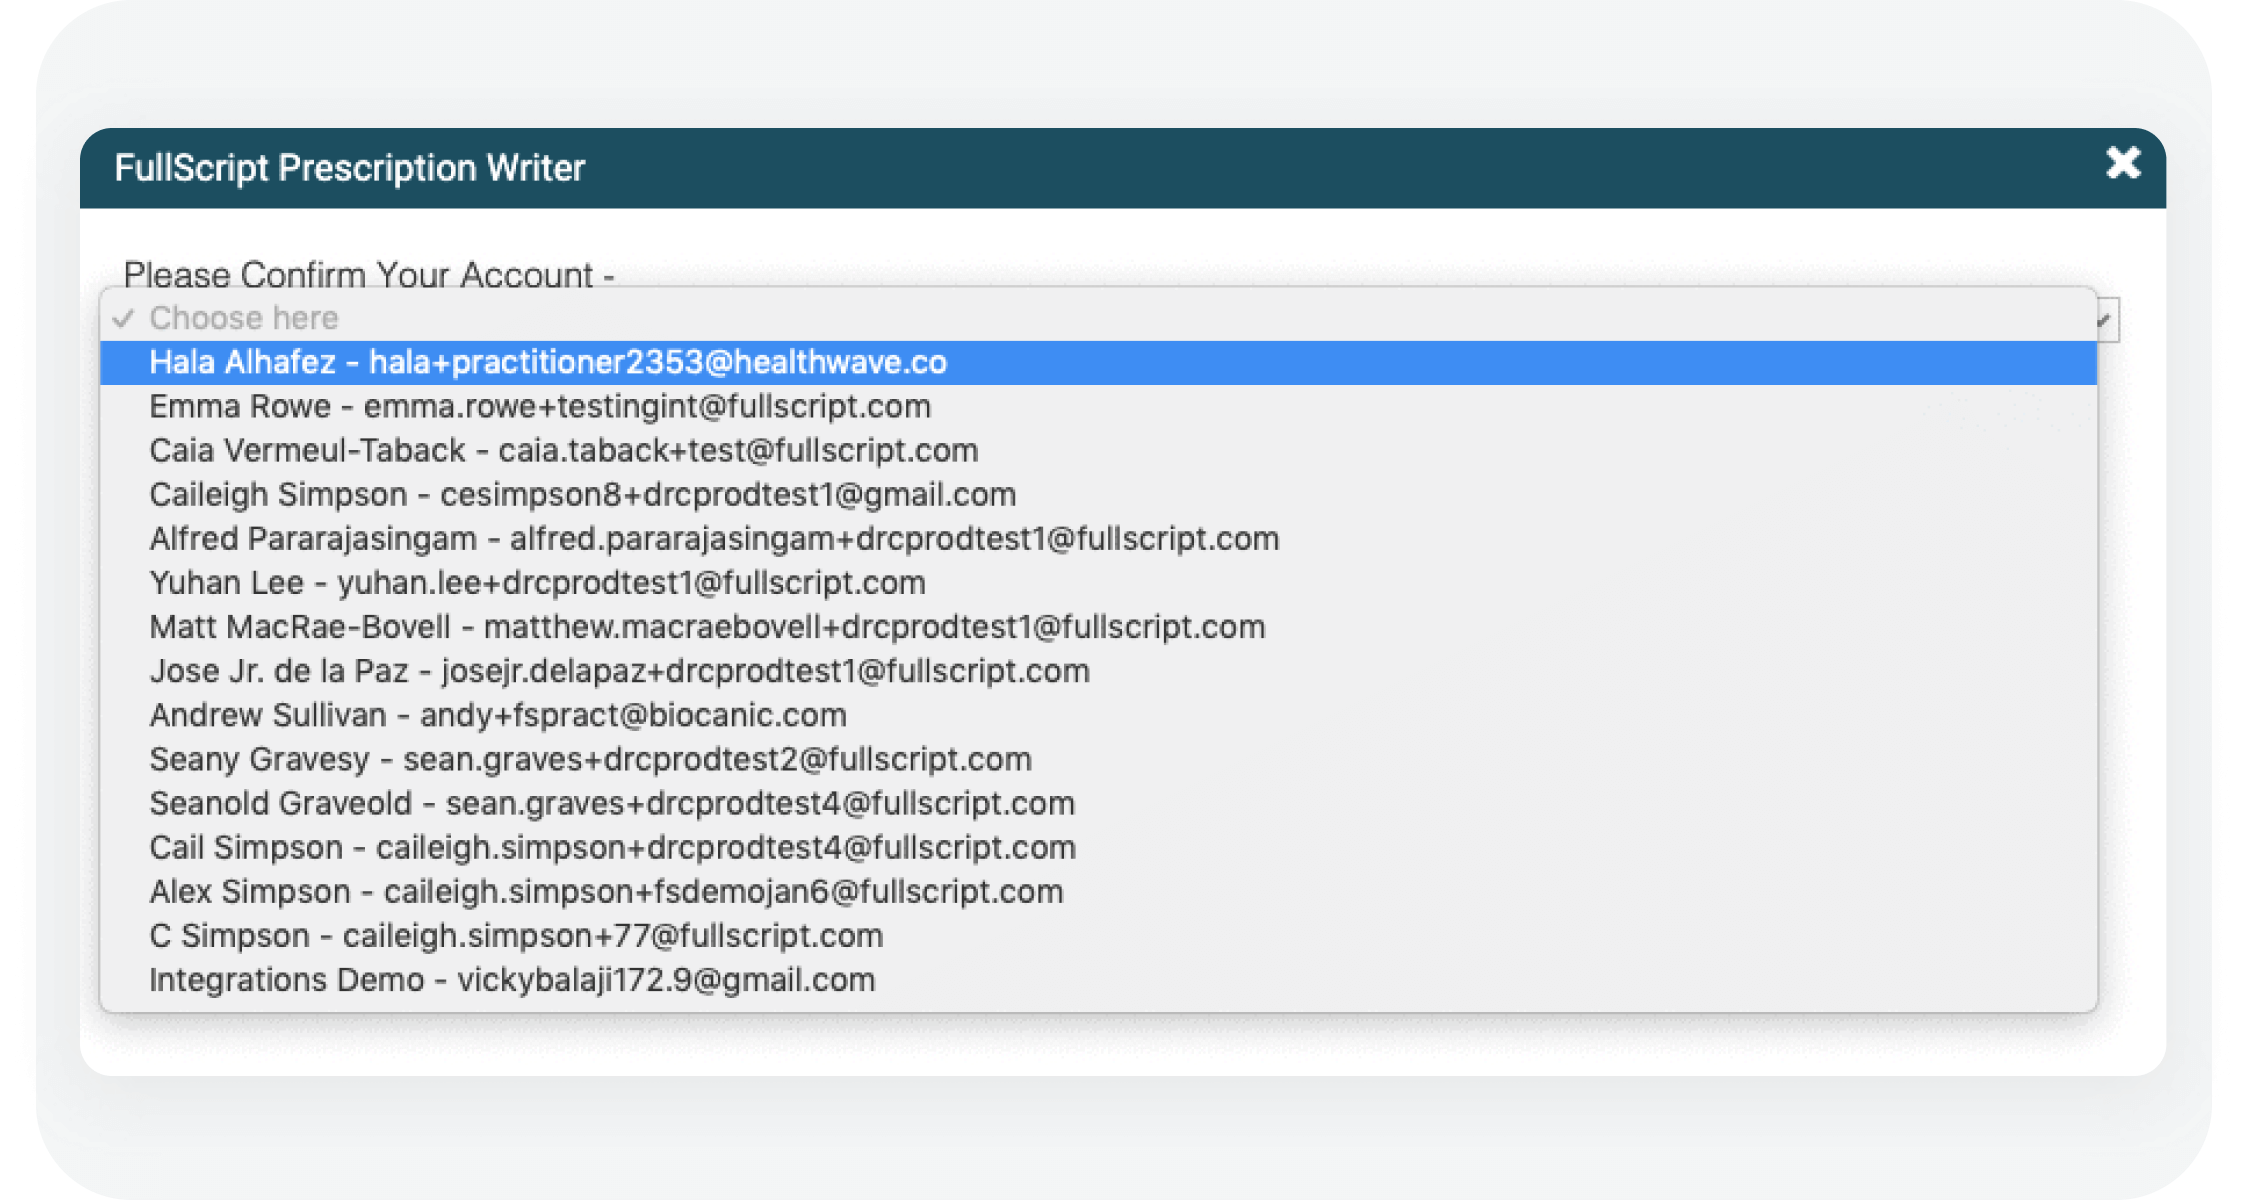 integrations partner screenshot of user accounts list in the Patient list’s “Actions” menu